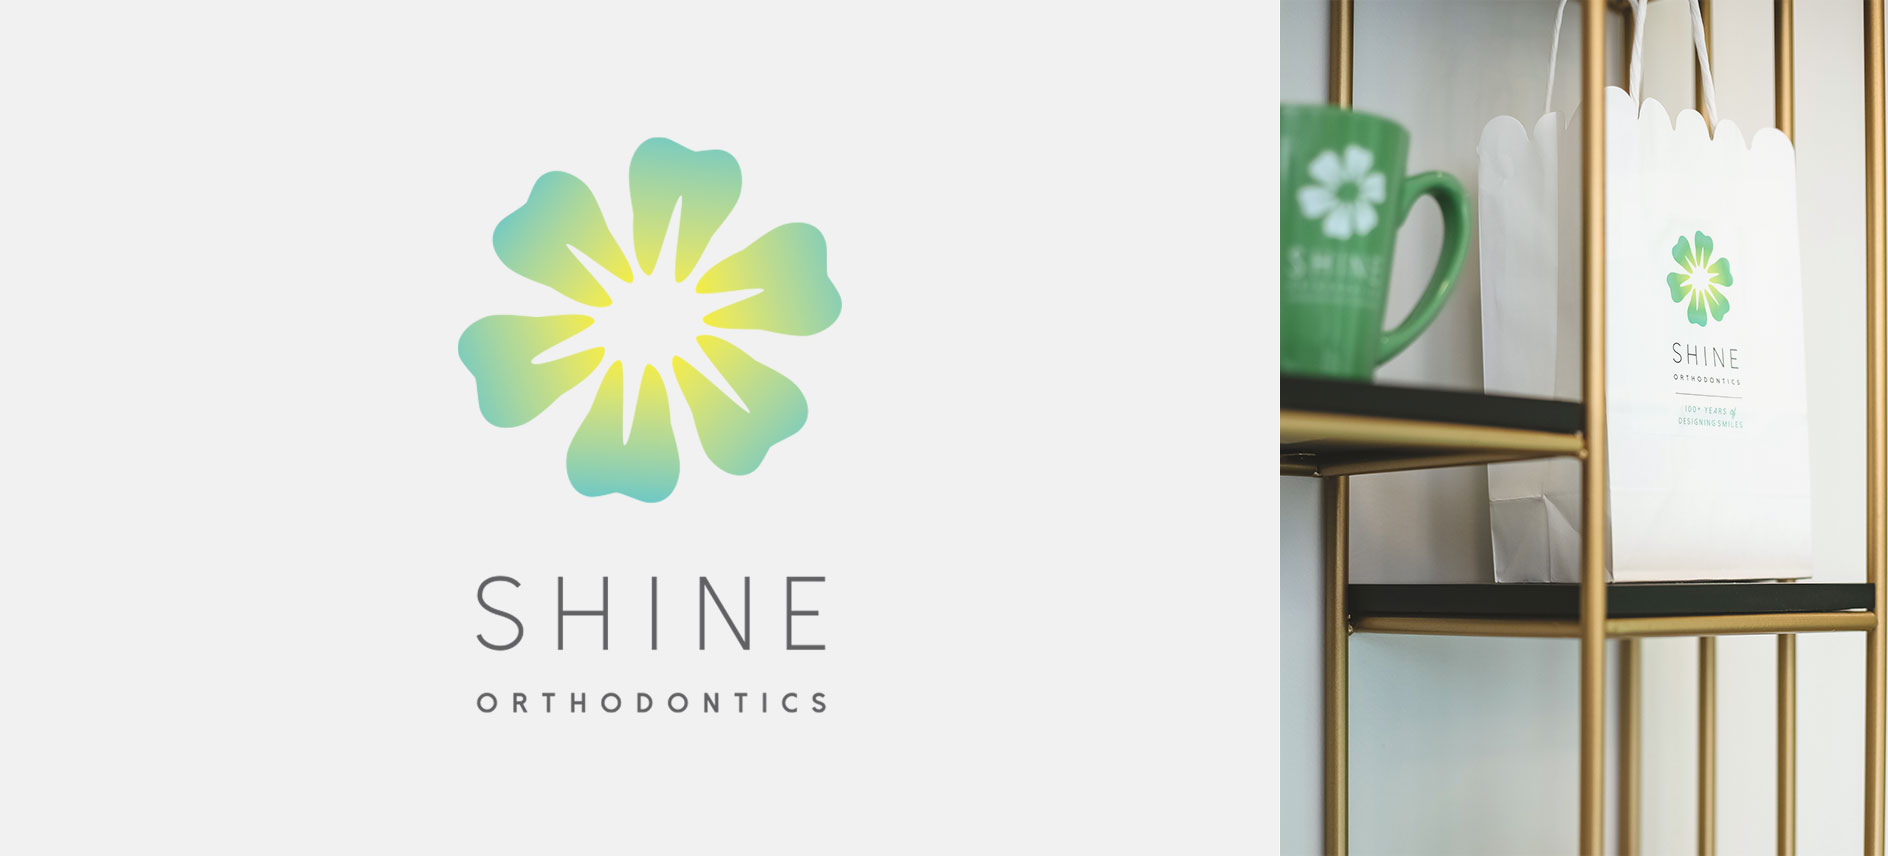 Shine Orthodontics - Compel Company